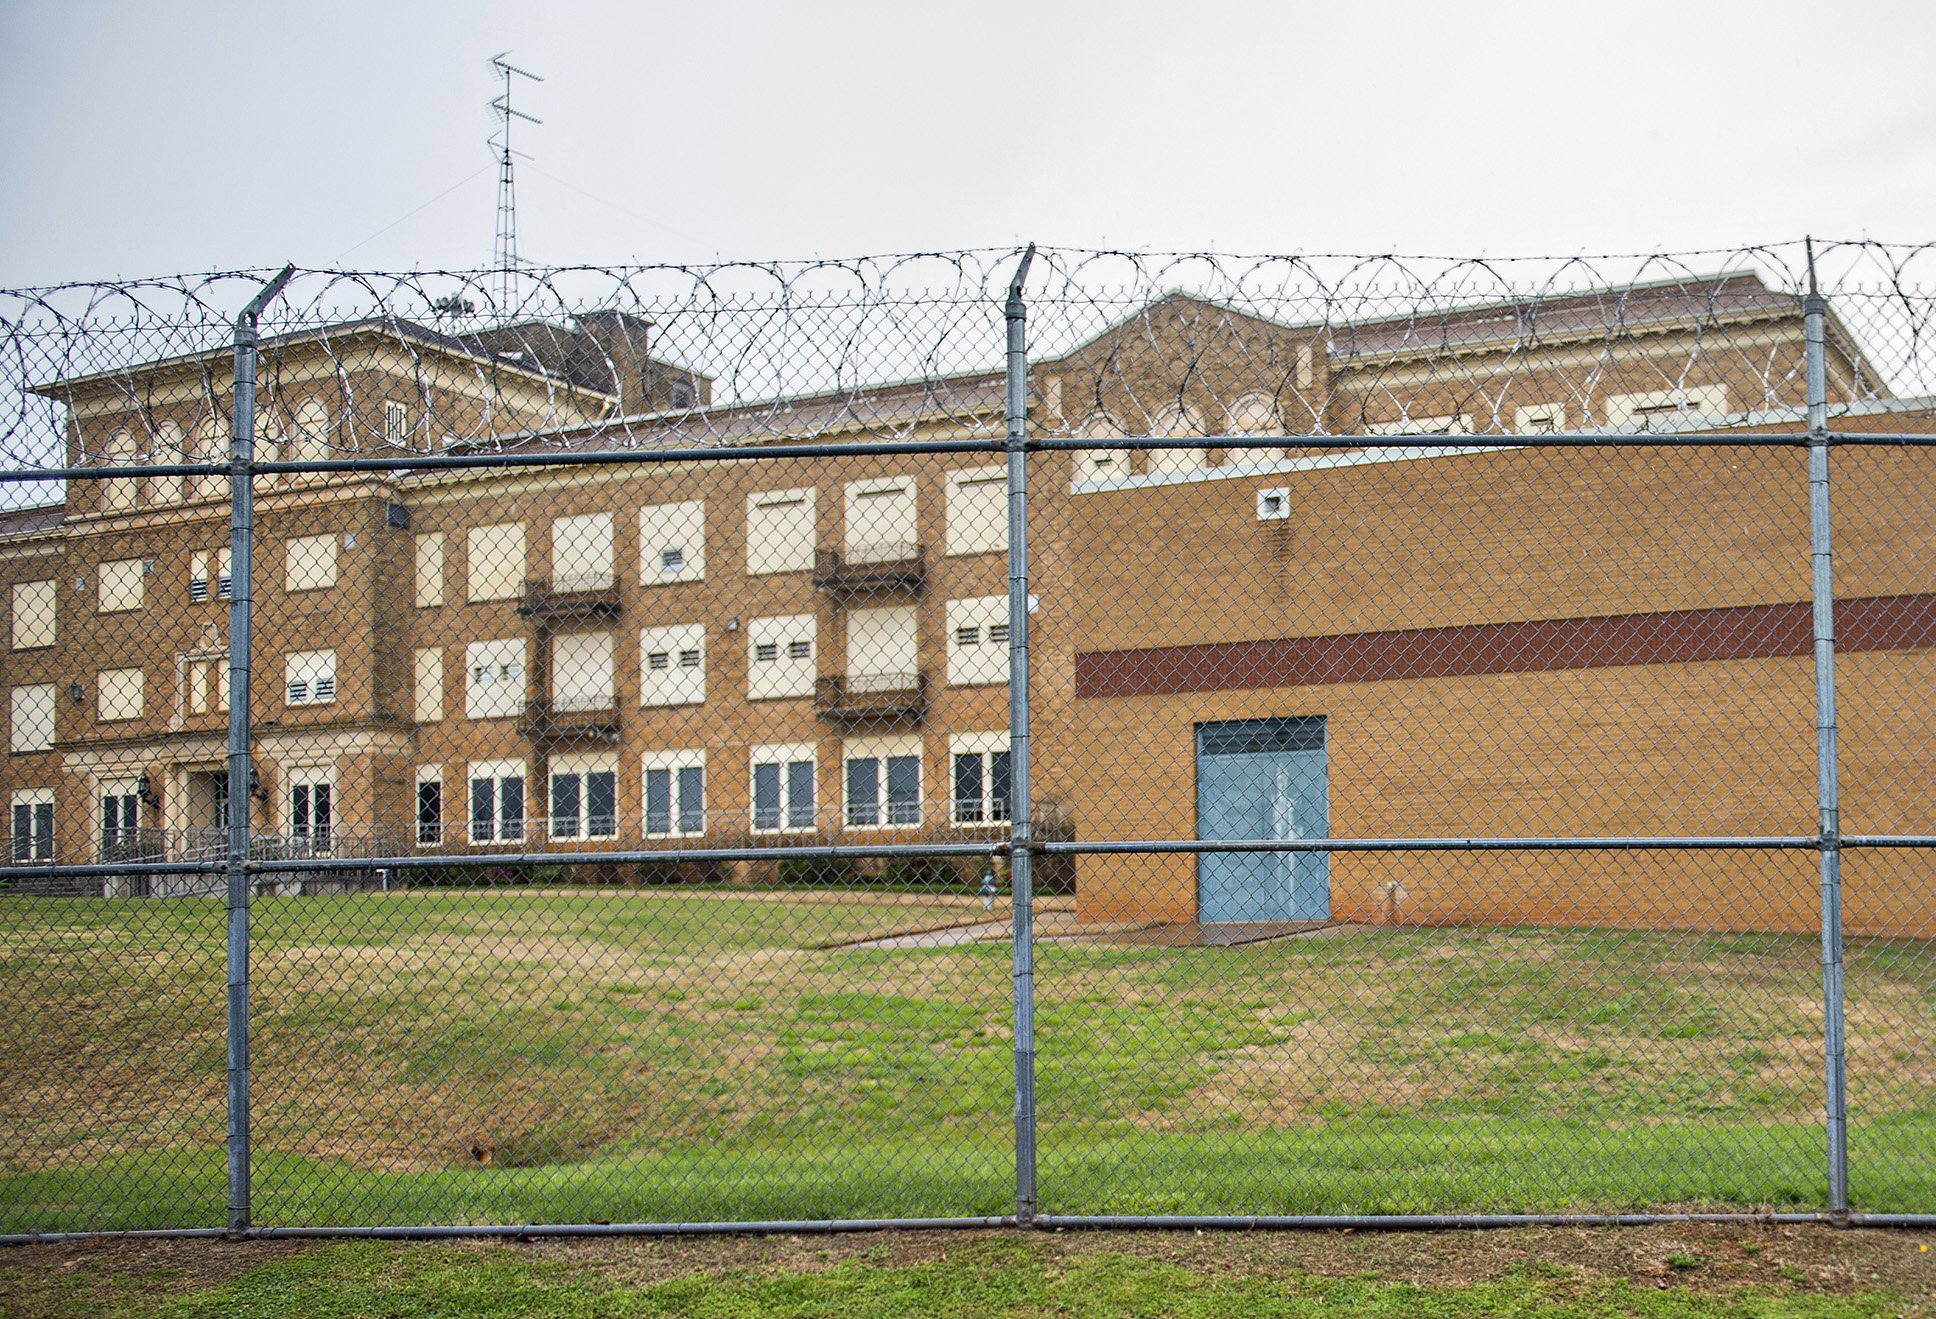 Critics blast Georgia prison conditions, staffing levels and care